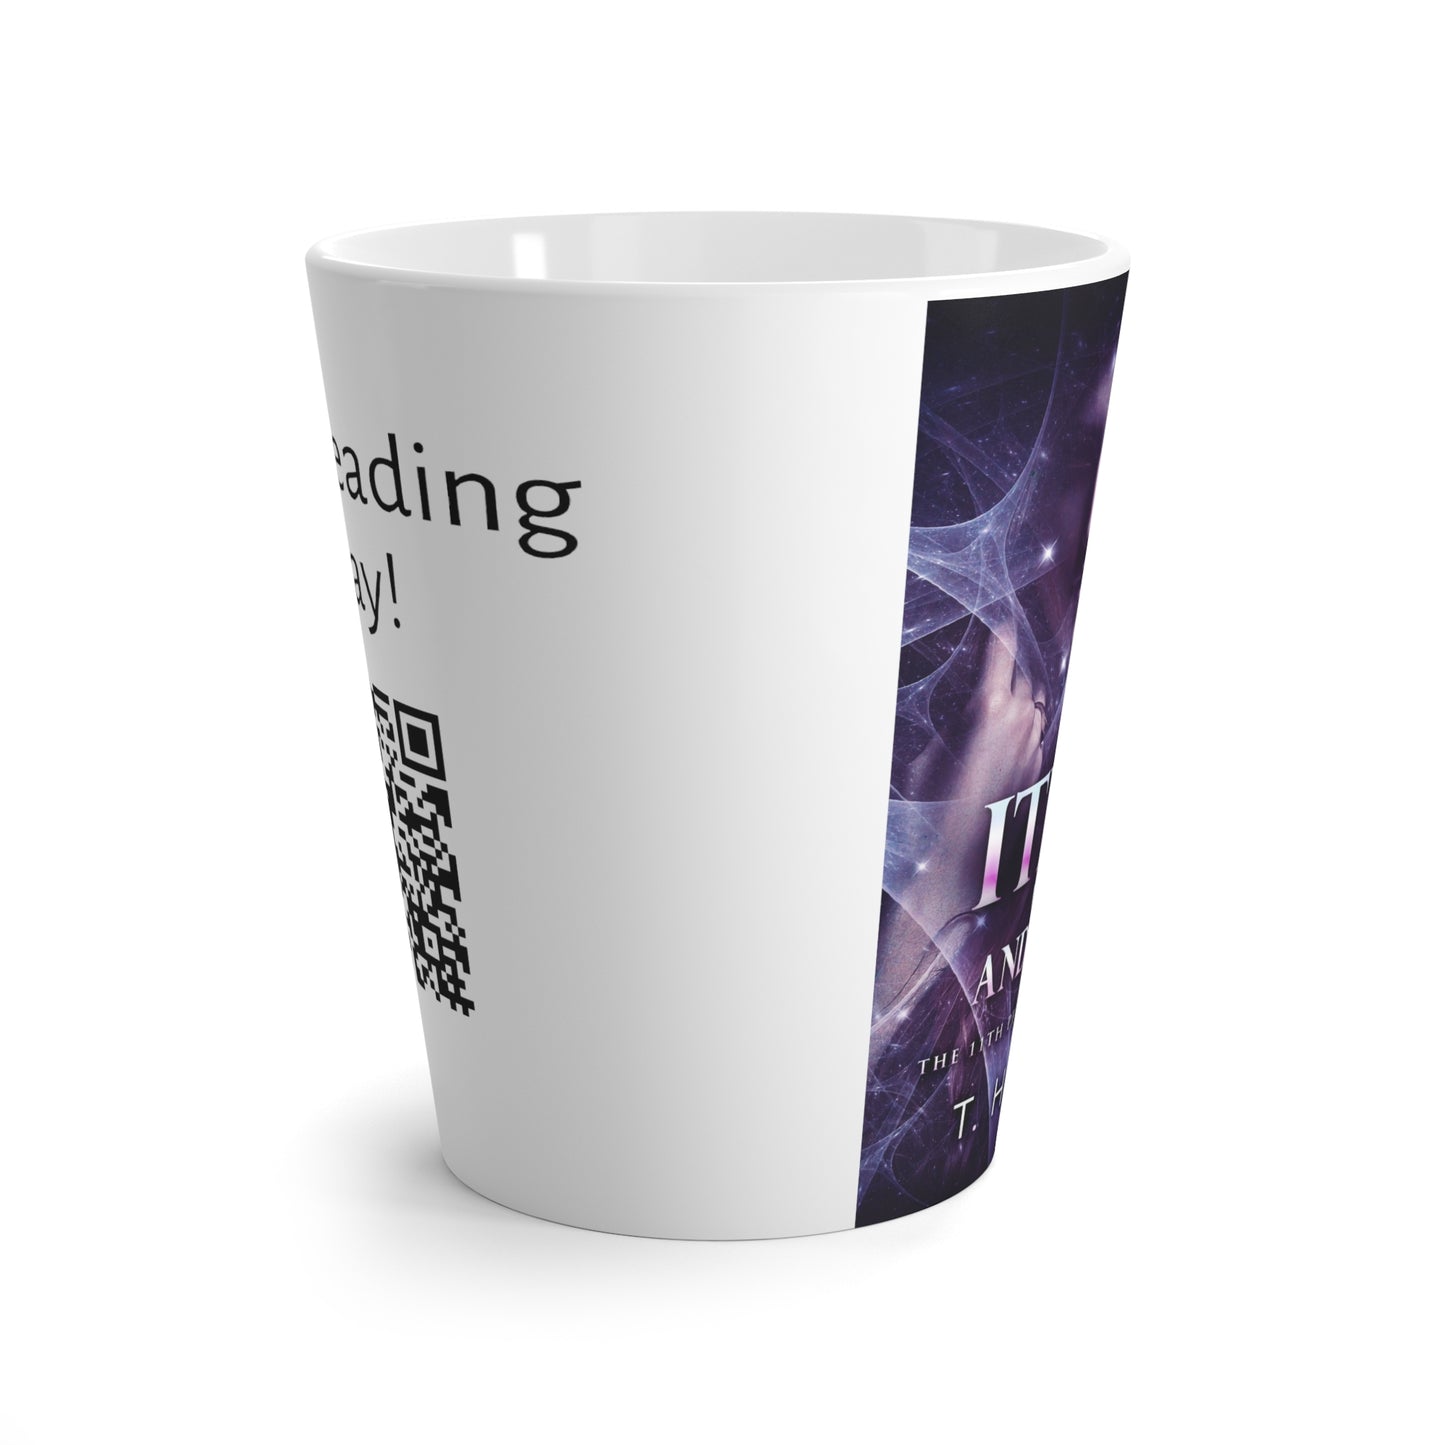 Item and Time - Latte Mug